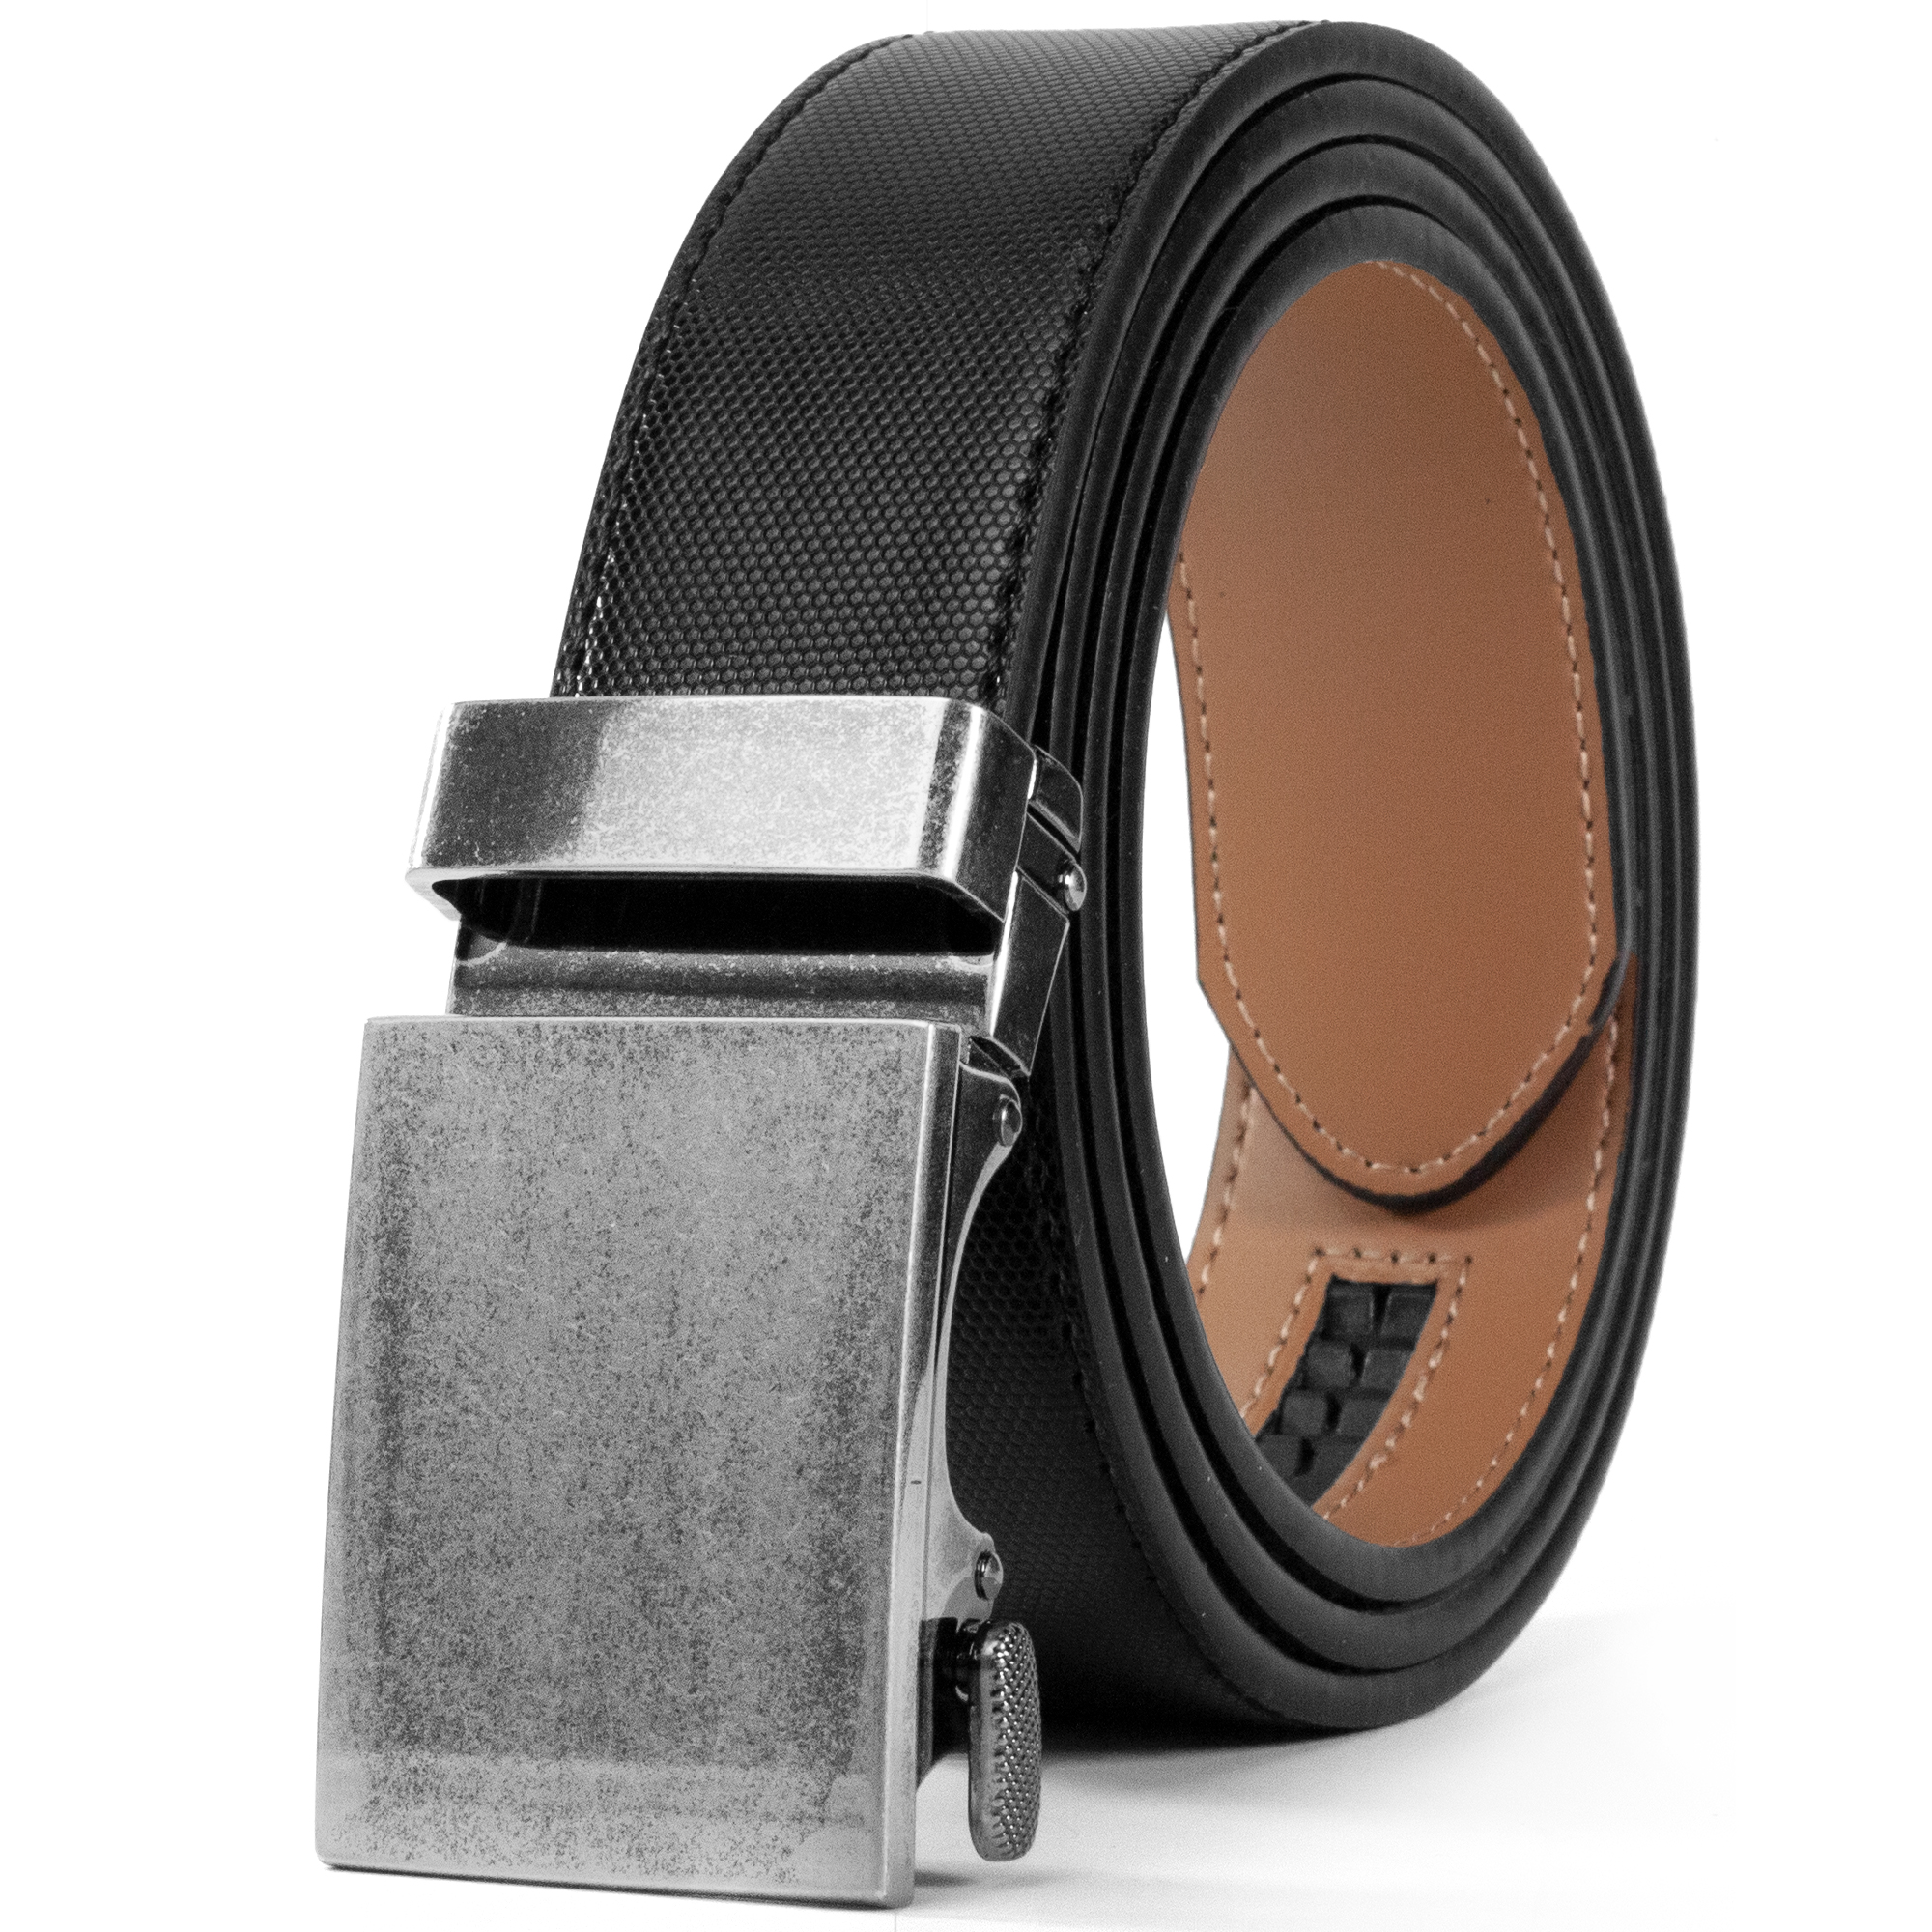 1 3/8 Wide Black/White/Brown CLUBBELTS Mens Leather Ratchet Belt with Automatic Buckle Adjustable Dress Belt for Men